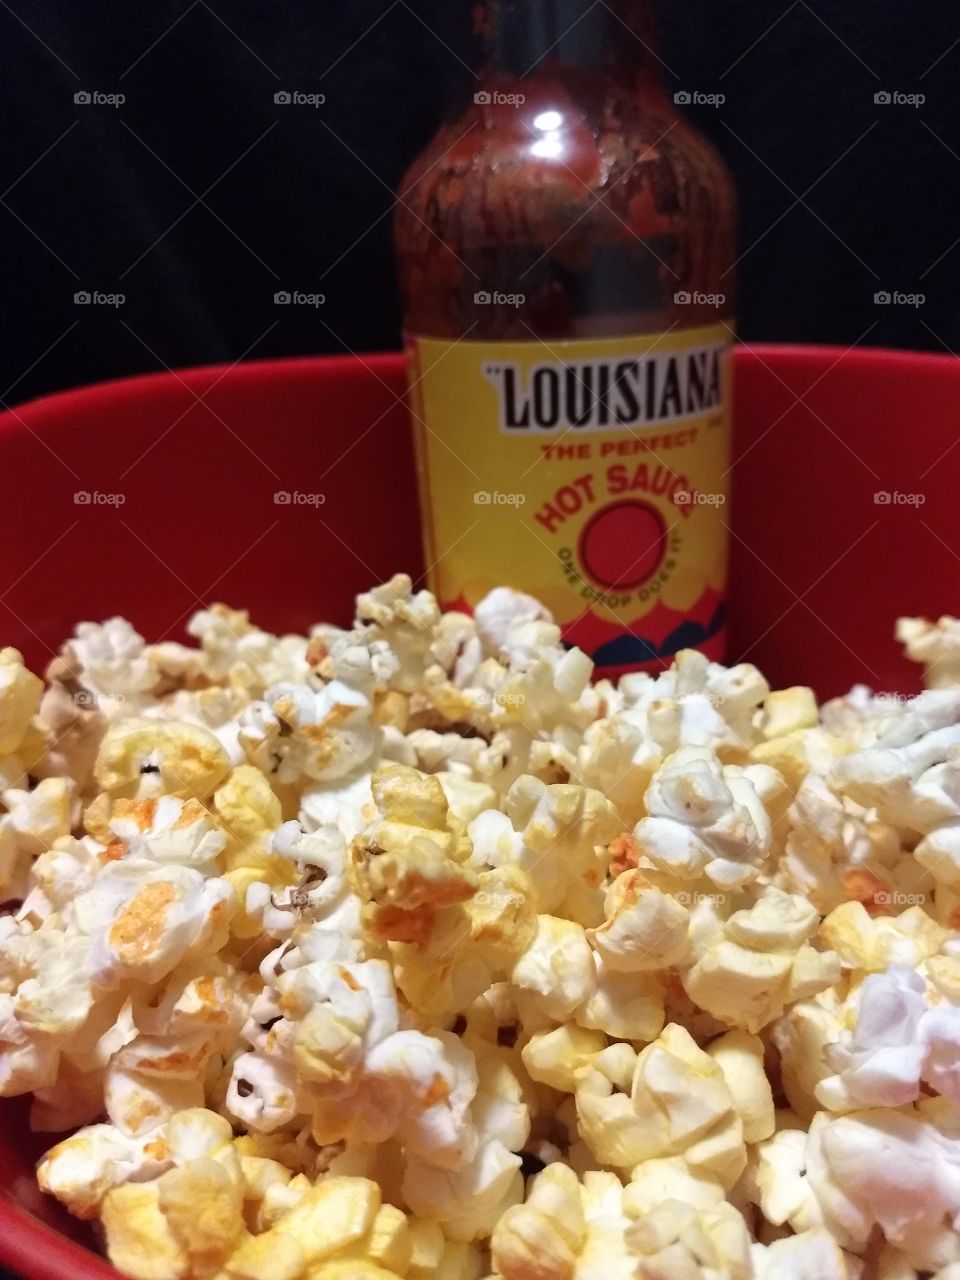 Louisiana hot sauce and popcorn one drop